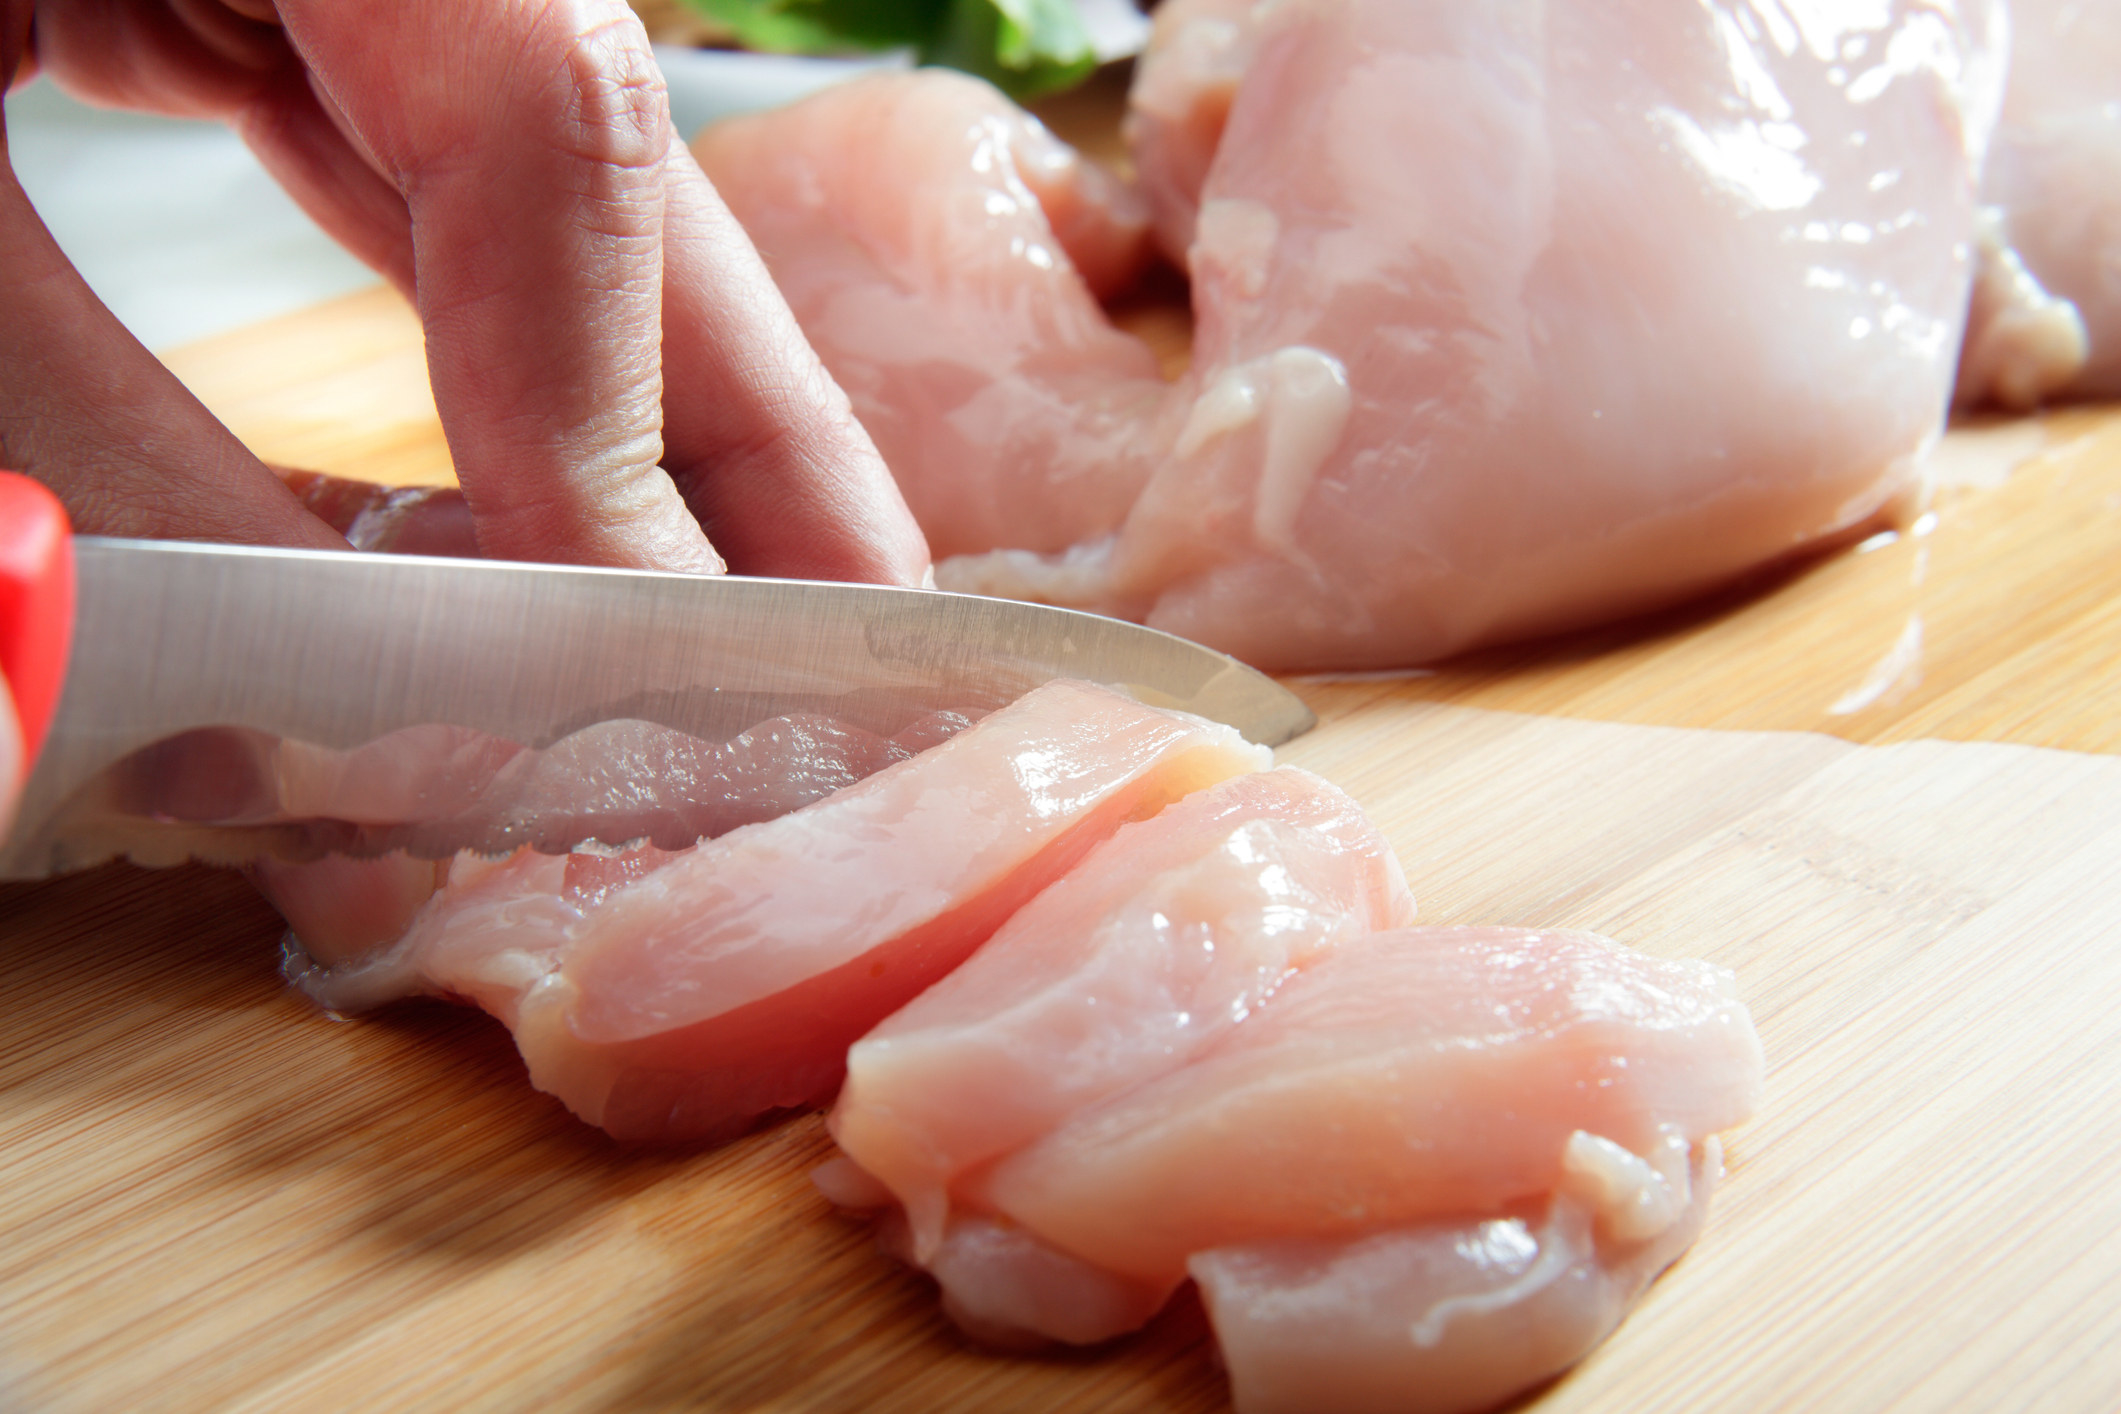 Slicing raw chicken.